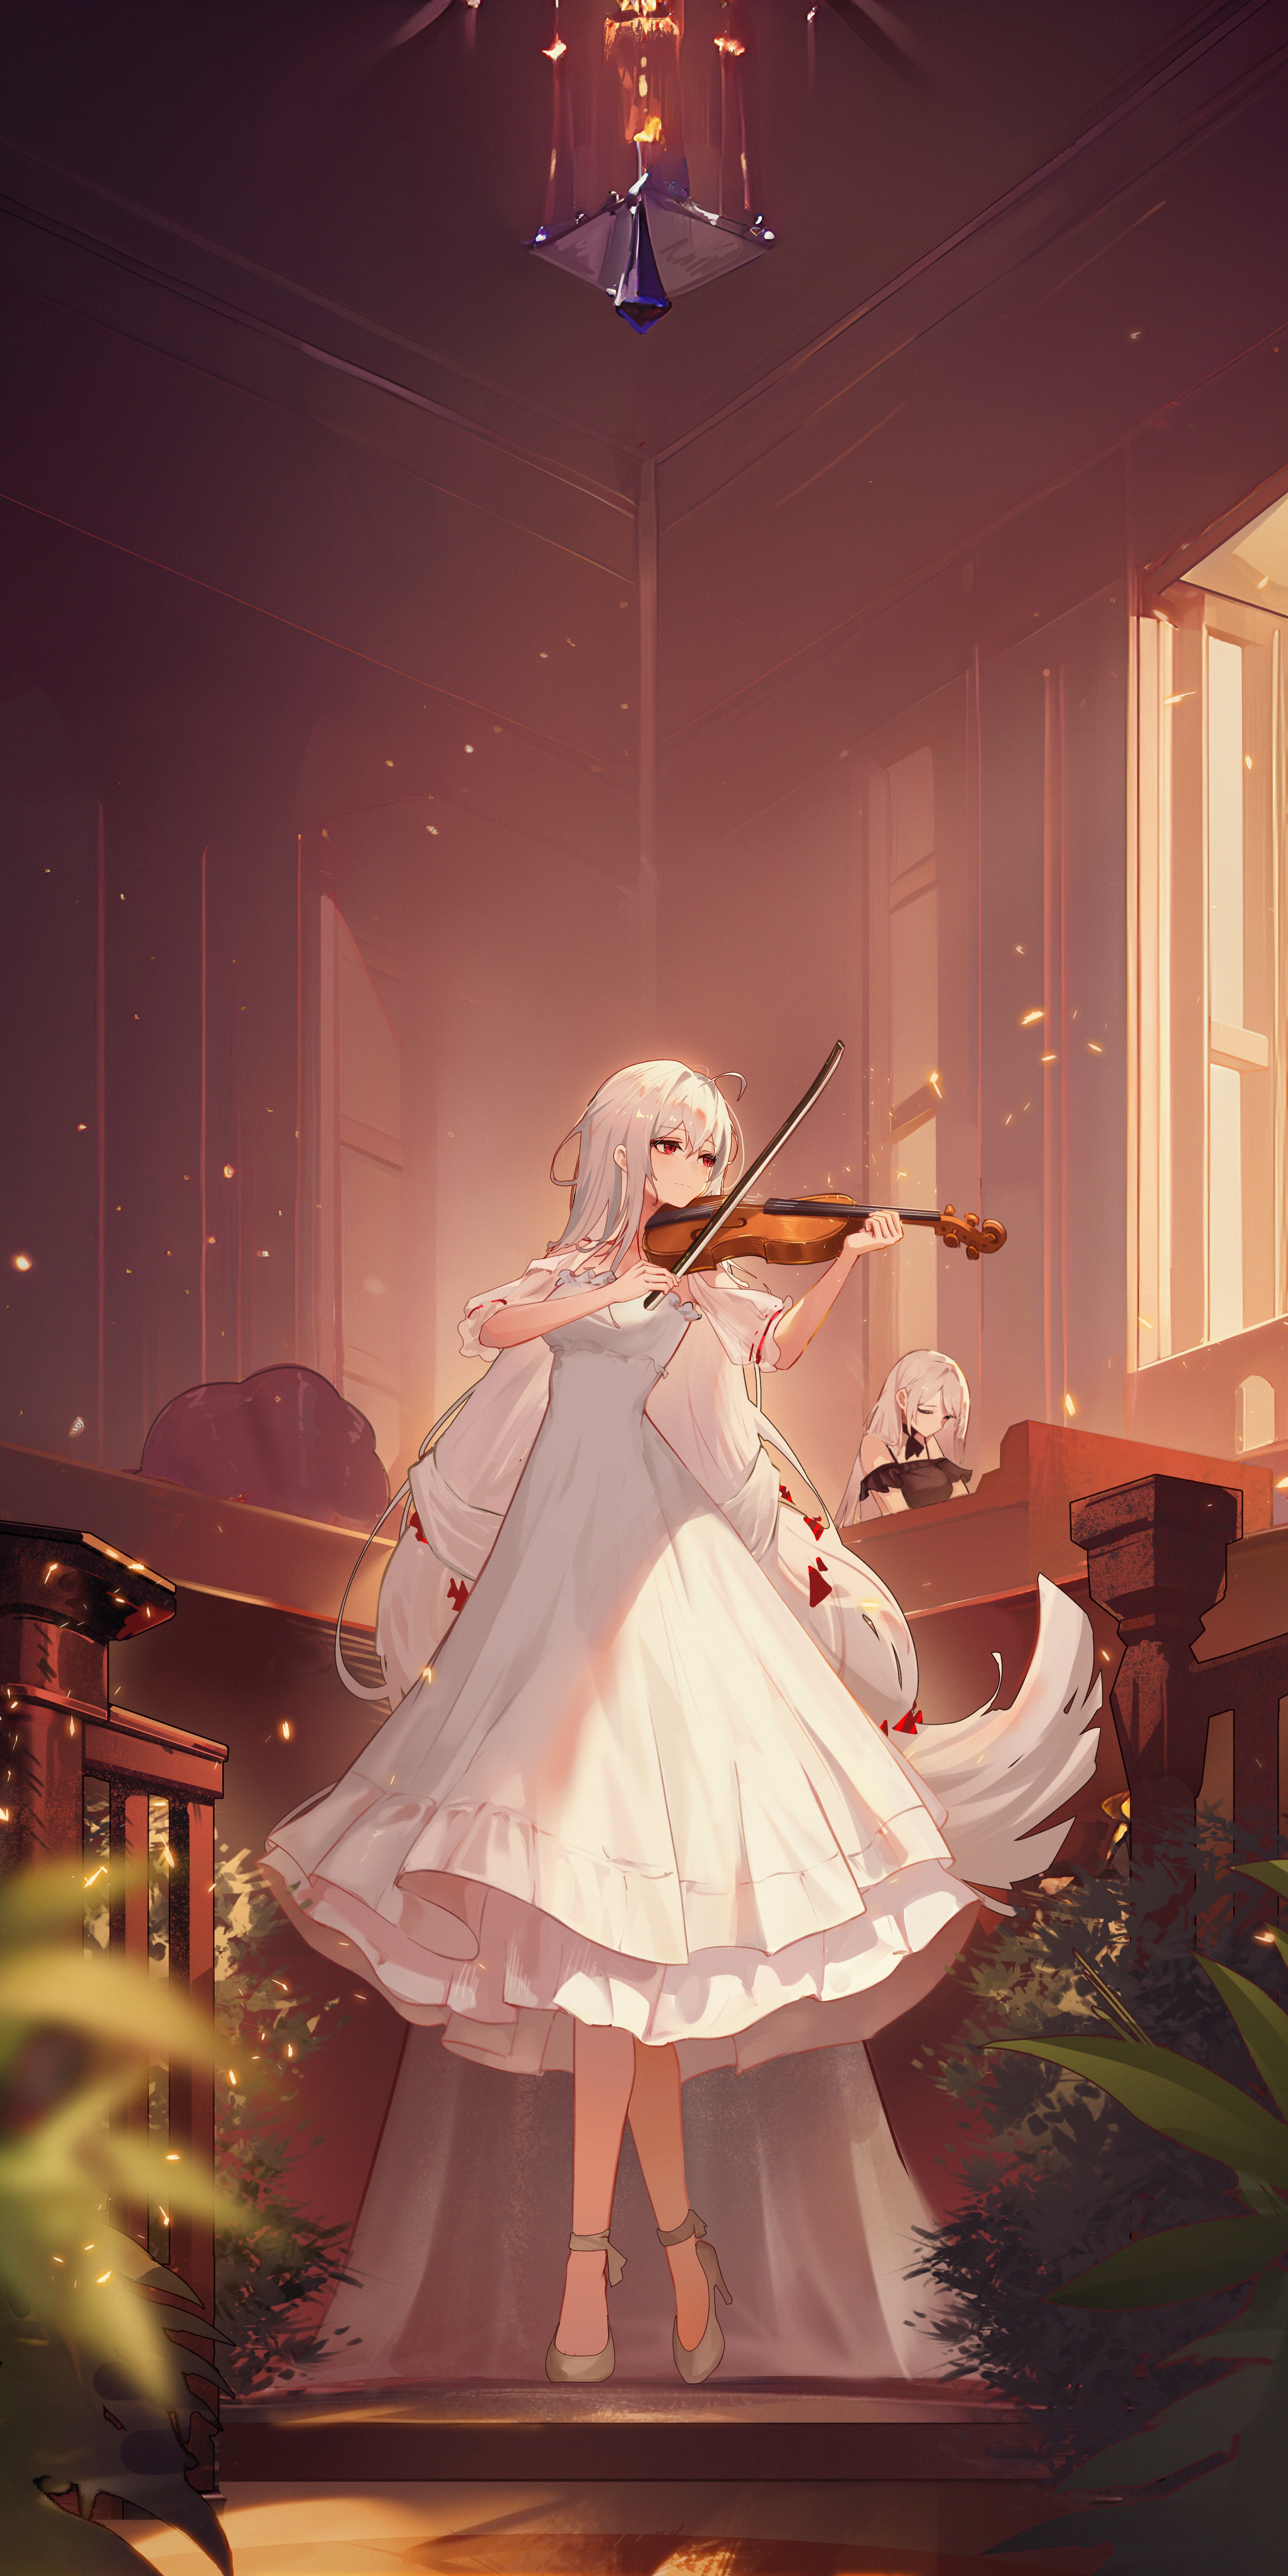 Anime 3992x7984 anime Pixiv anime girls violin musical instrument dress portrait display leaves standing heels tiptoe piano long hair red eyes closed eyes white hair